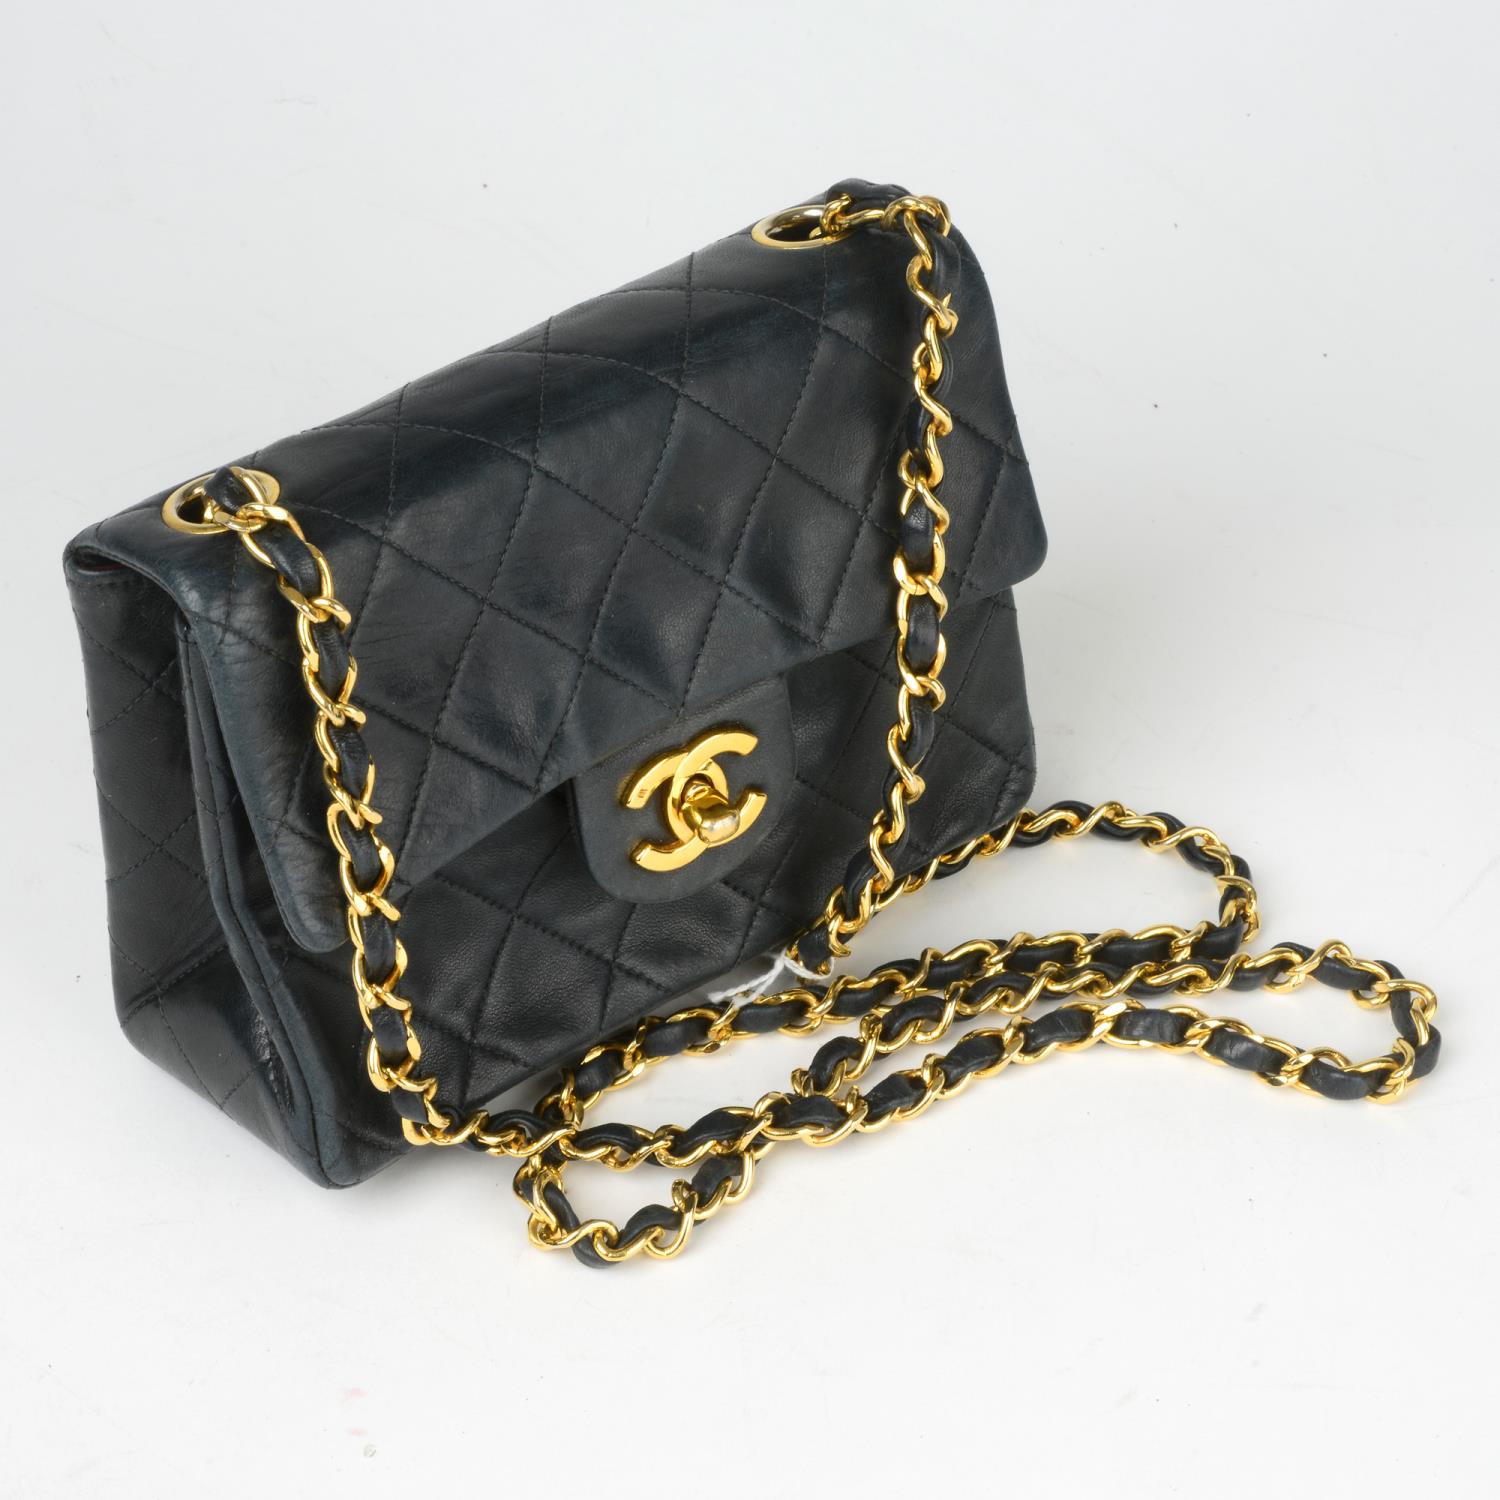 CHANEL - a Mini Square Classic Flap handbag. - Image 2 of 5